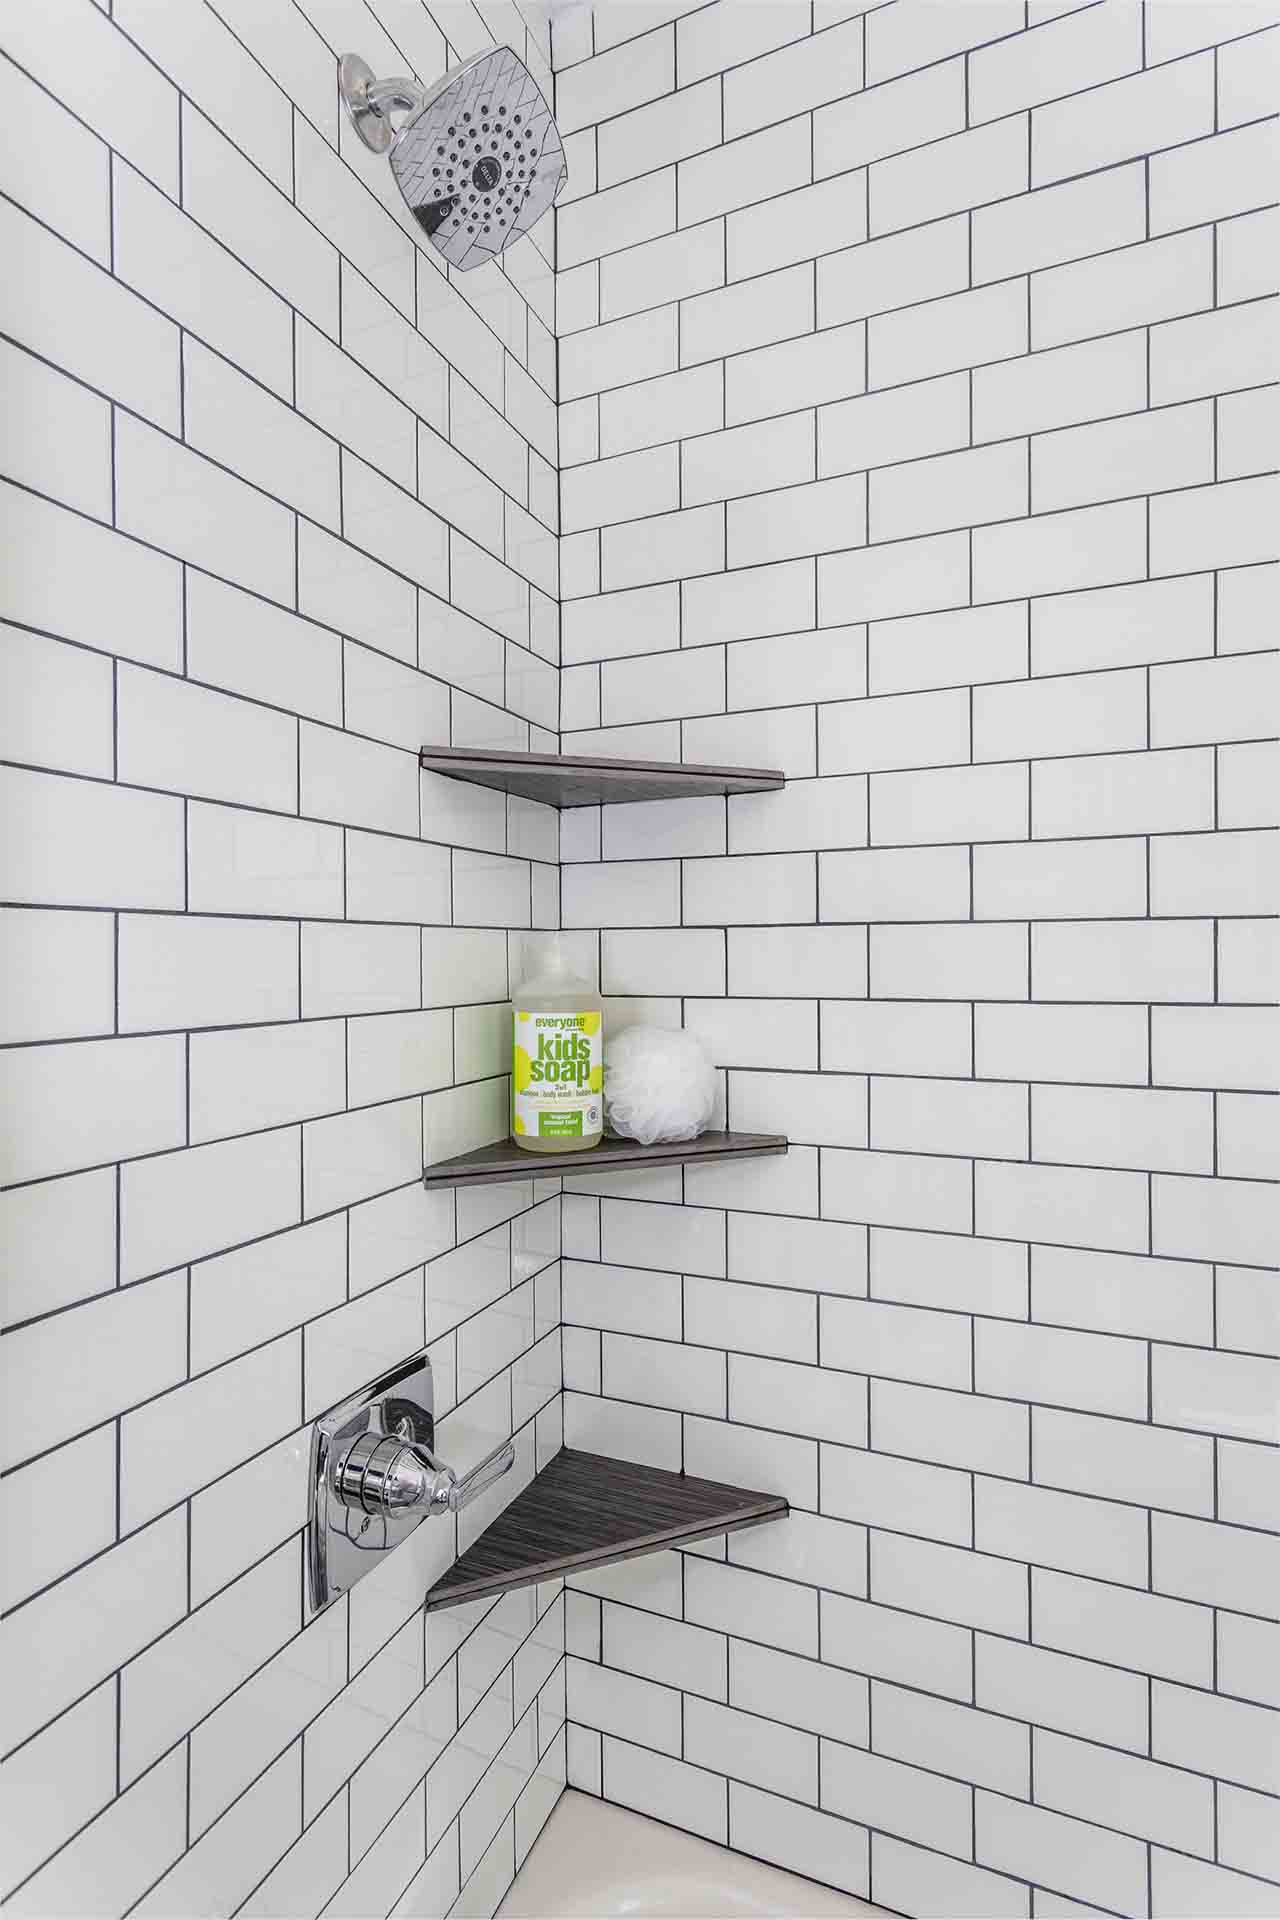 Tiled shower with shelves